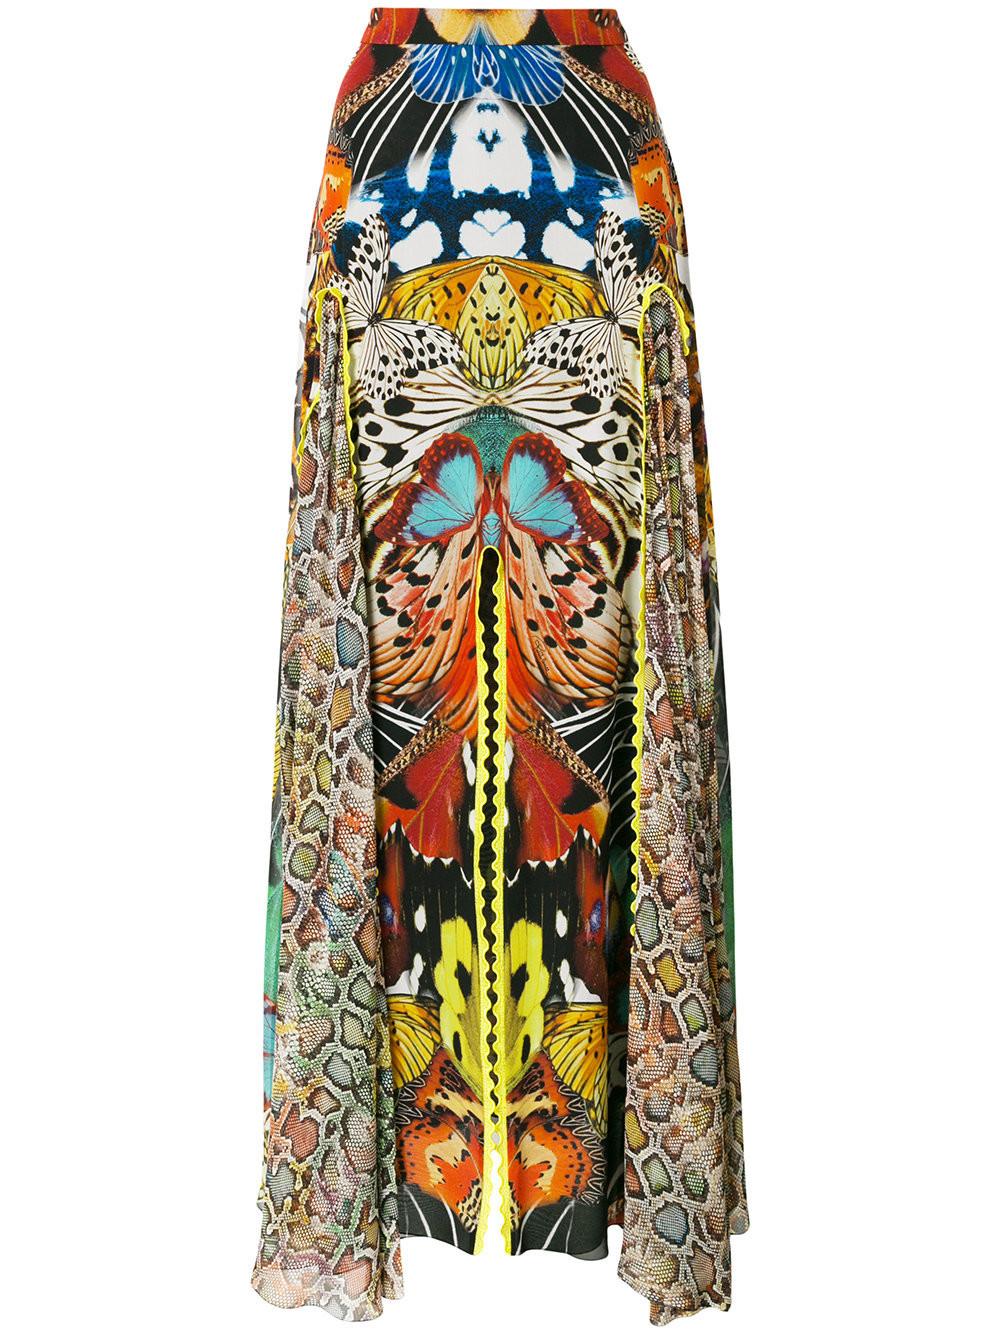 New Roberto Cavalli Butterfly Print Silk Maxi Skirt Italian size 40 For Sale 5